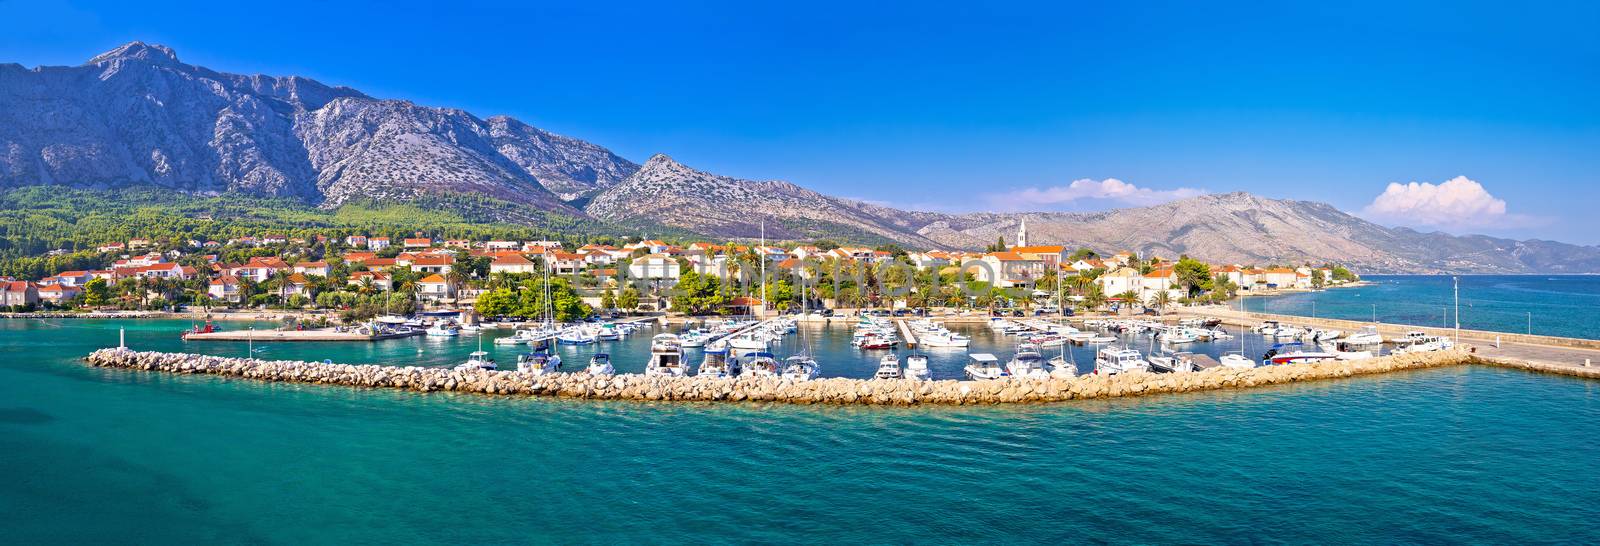 Town of Orebic on Peljesac peninsula waterfront panoramic view, southern Dalmatia region of Croatia
